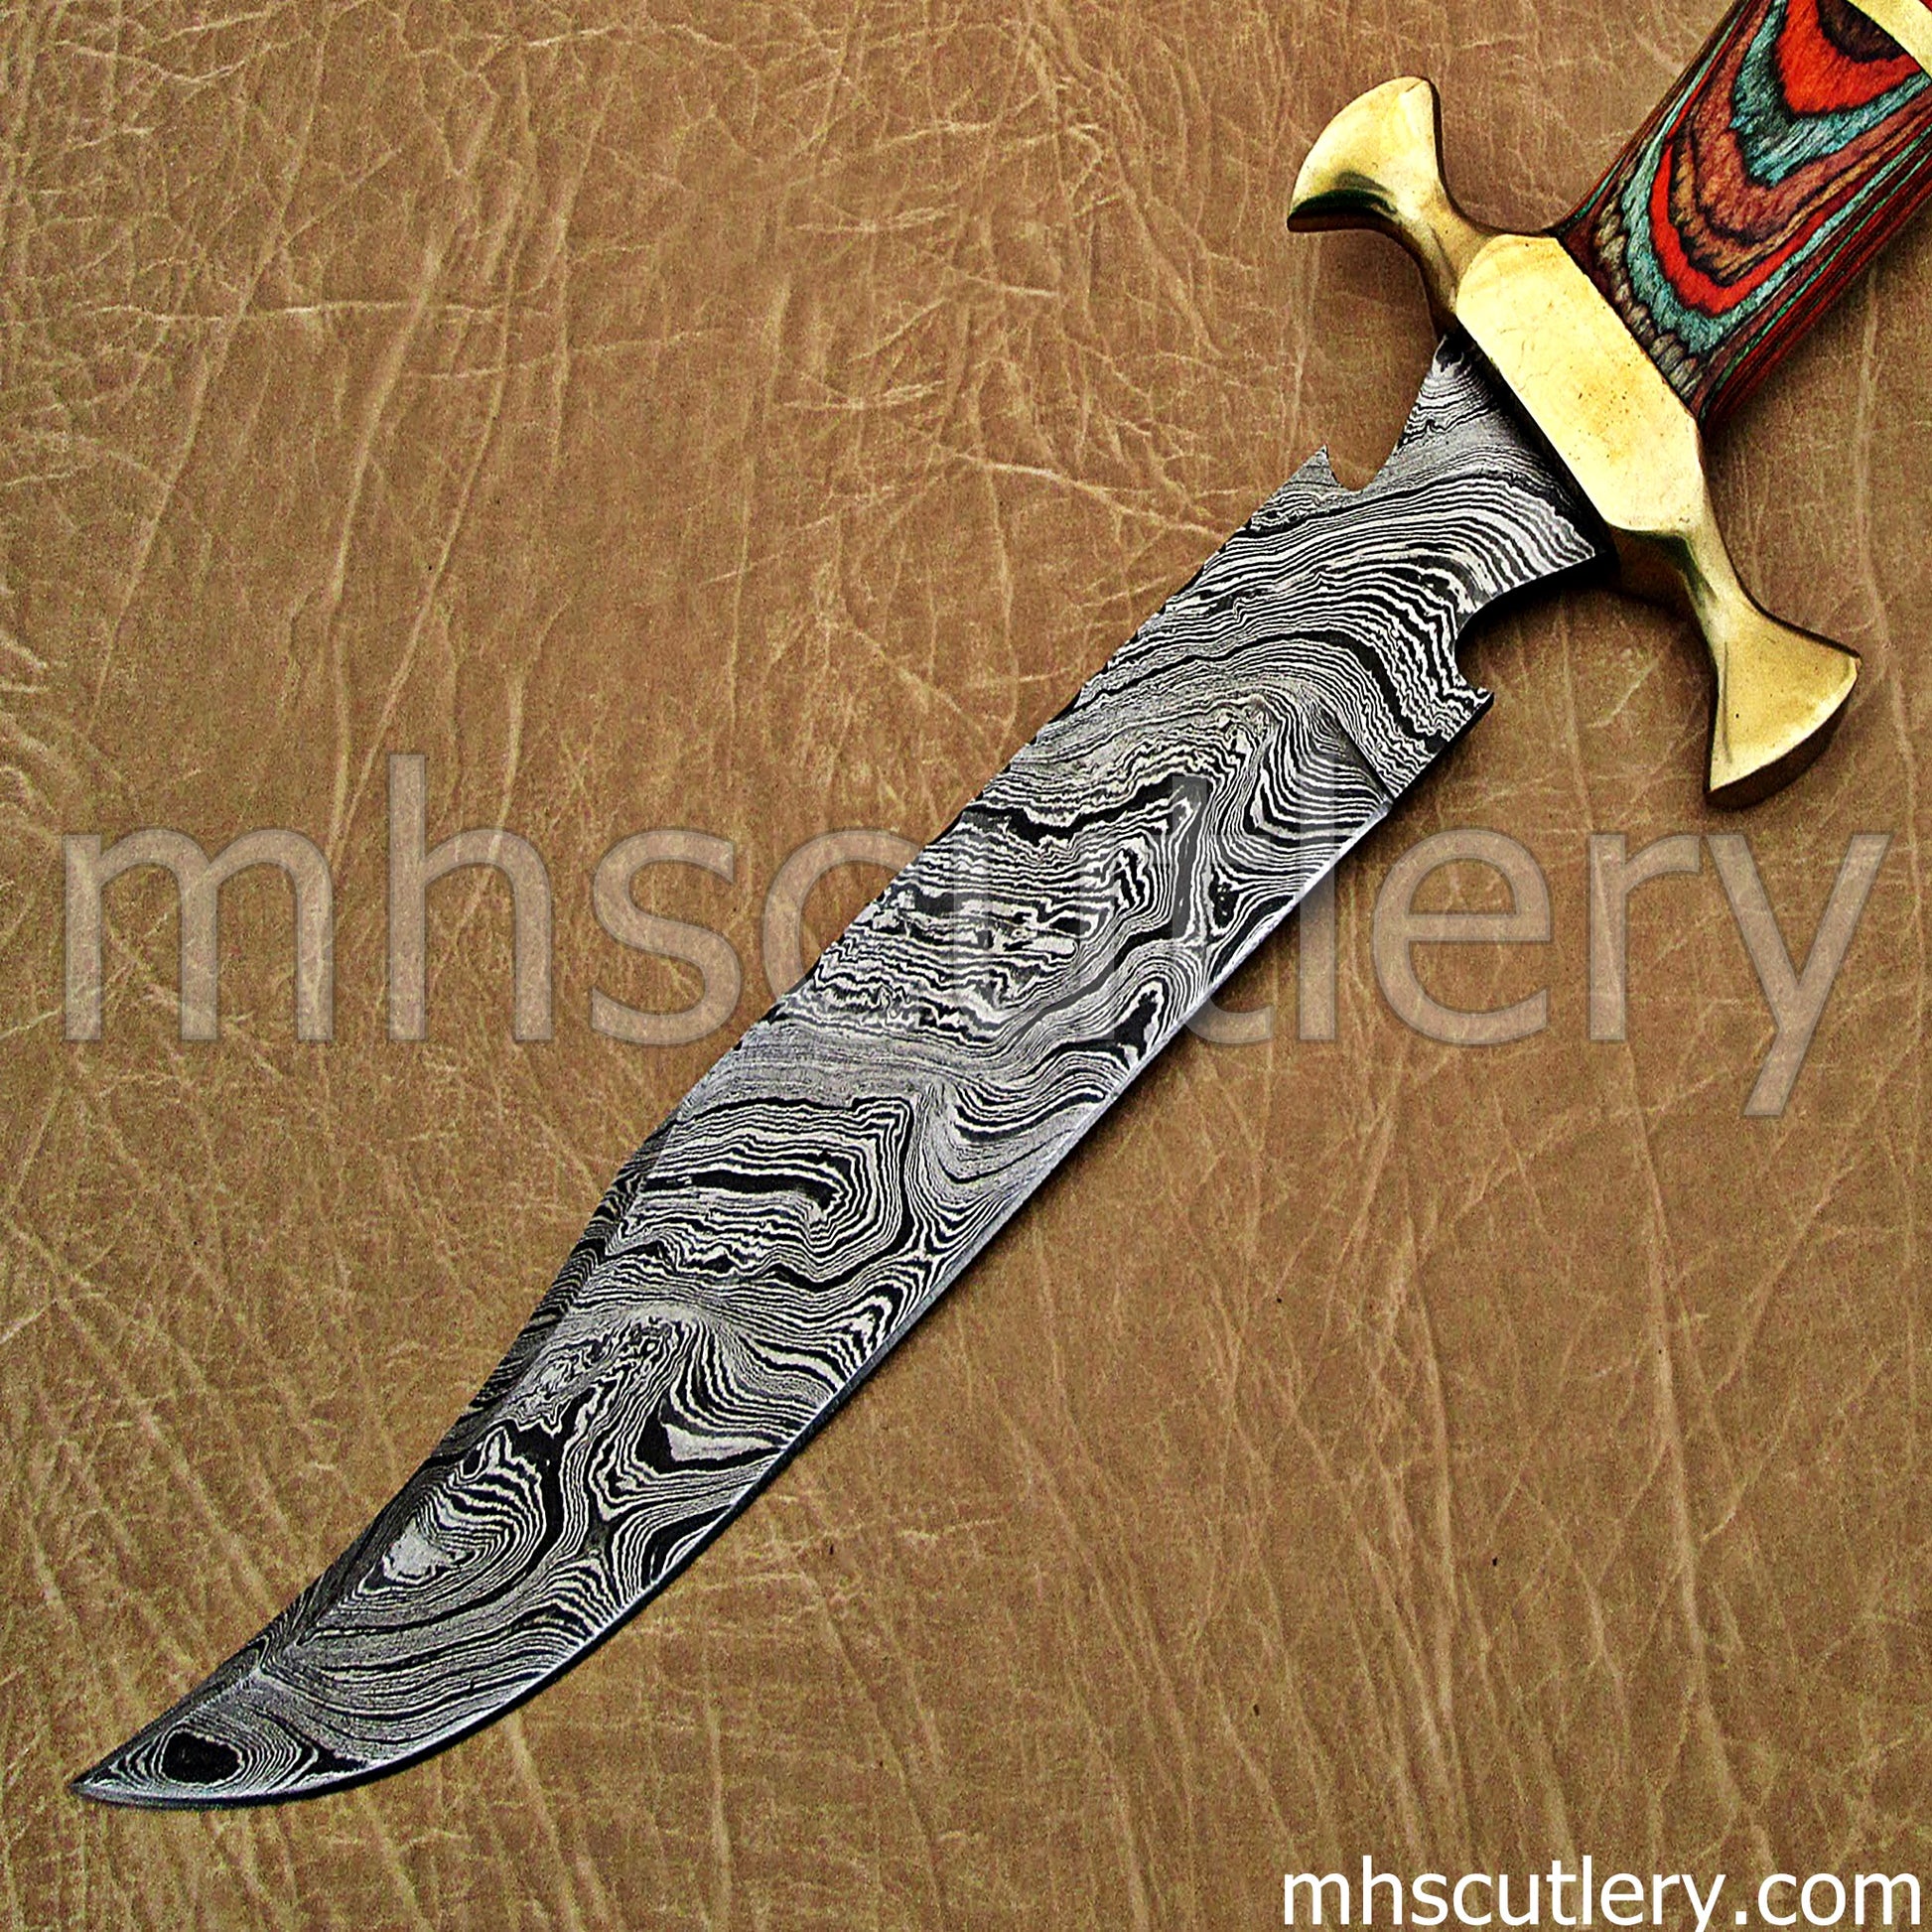 Custom Hand Forged Damascus Steel Vampire Hunter Knife | mhscutlery